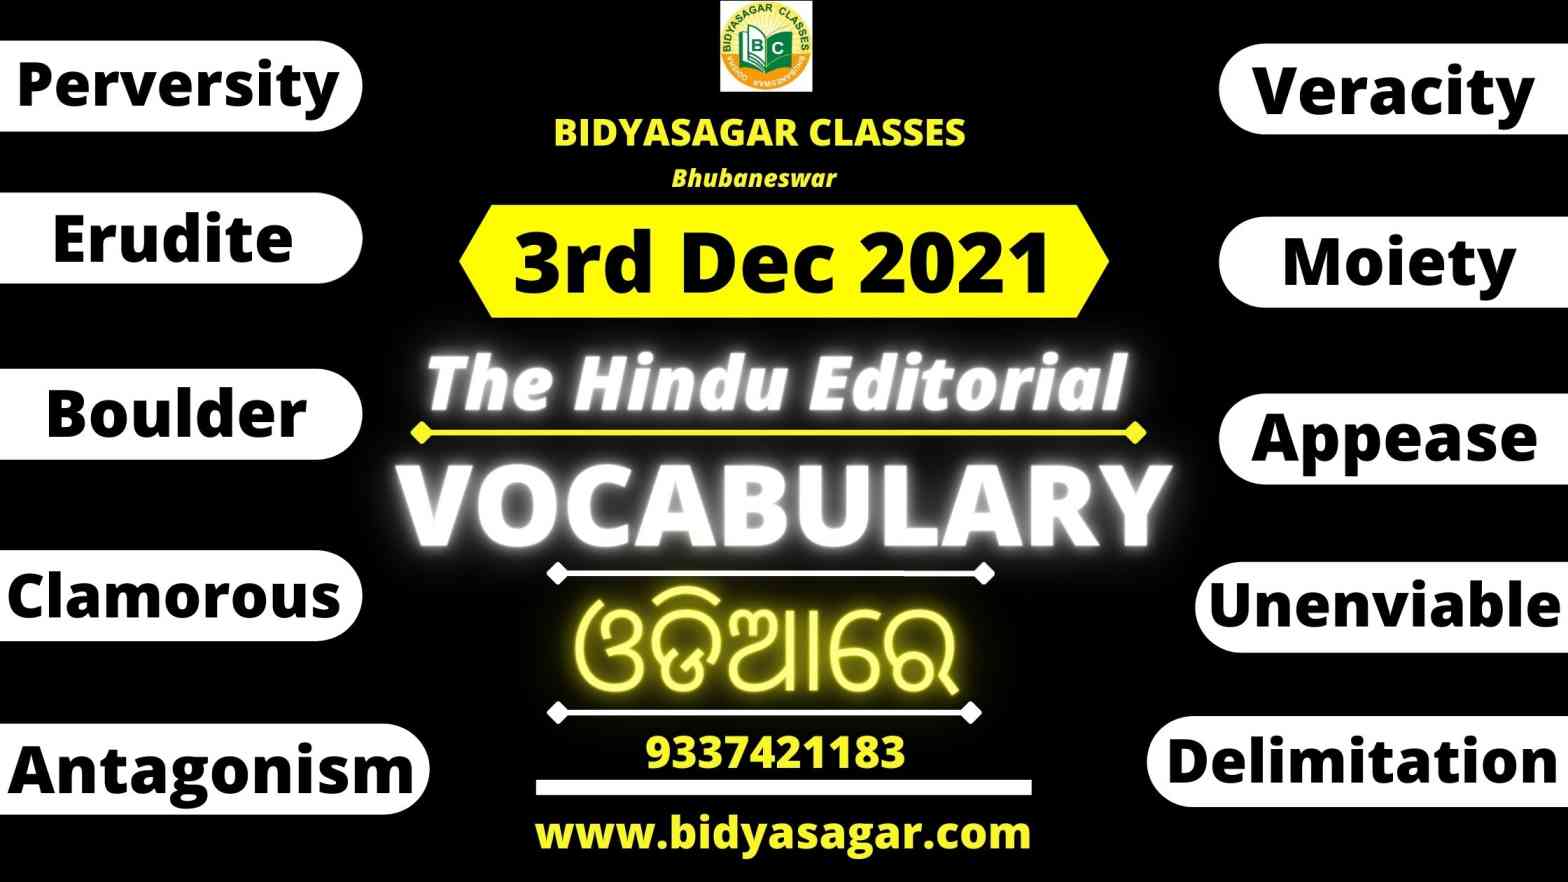 The Hindu Editorial Vocabulary of 3rd December 2021